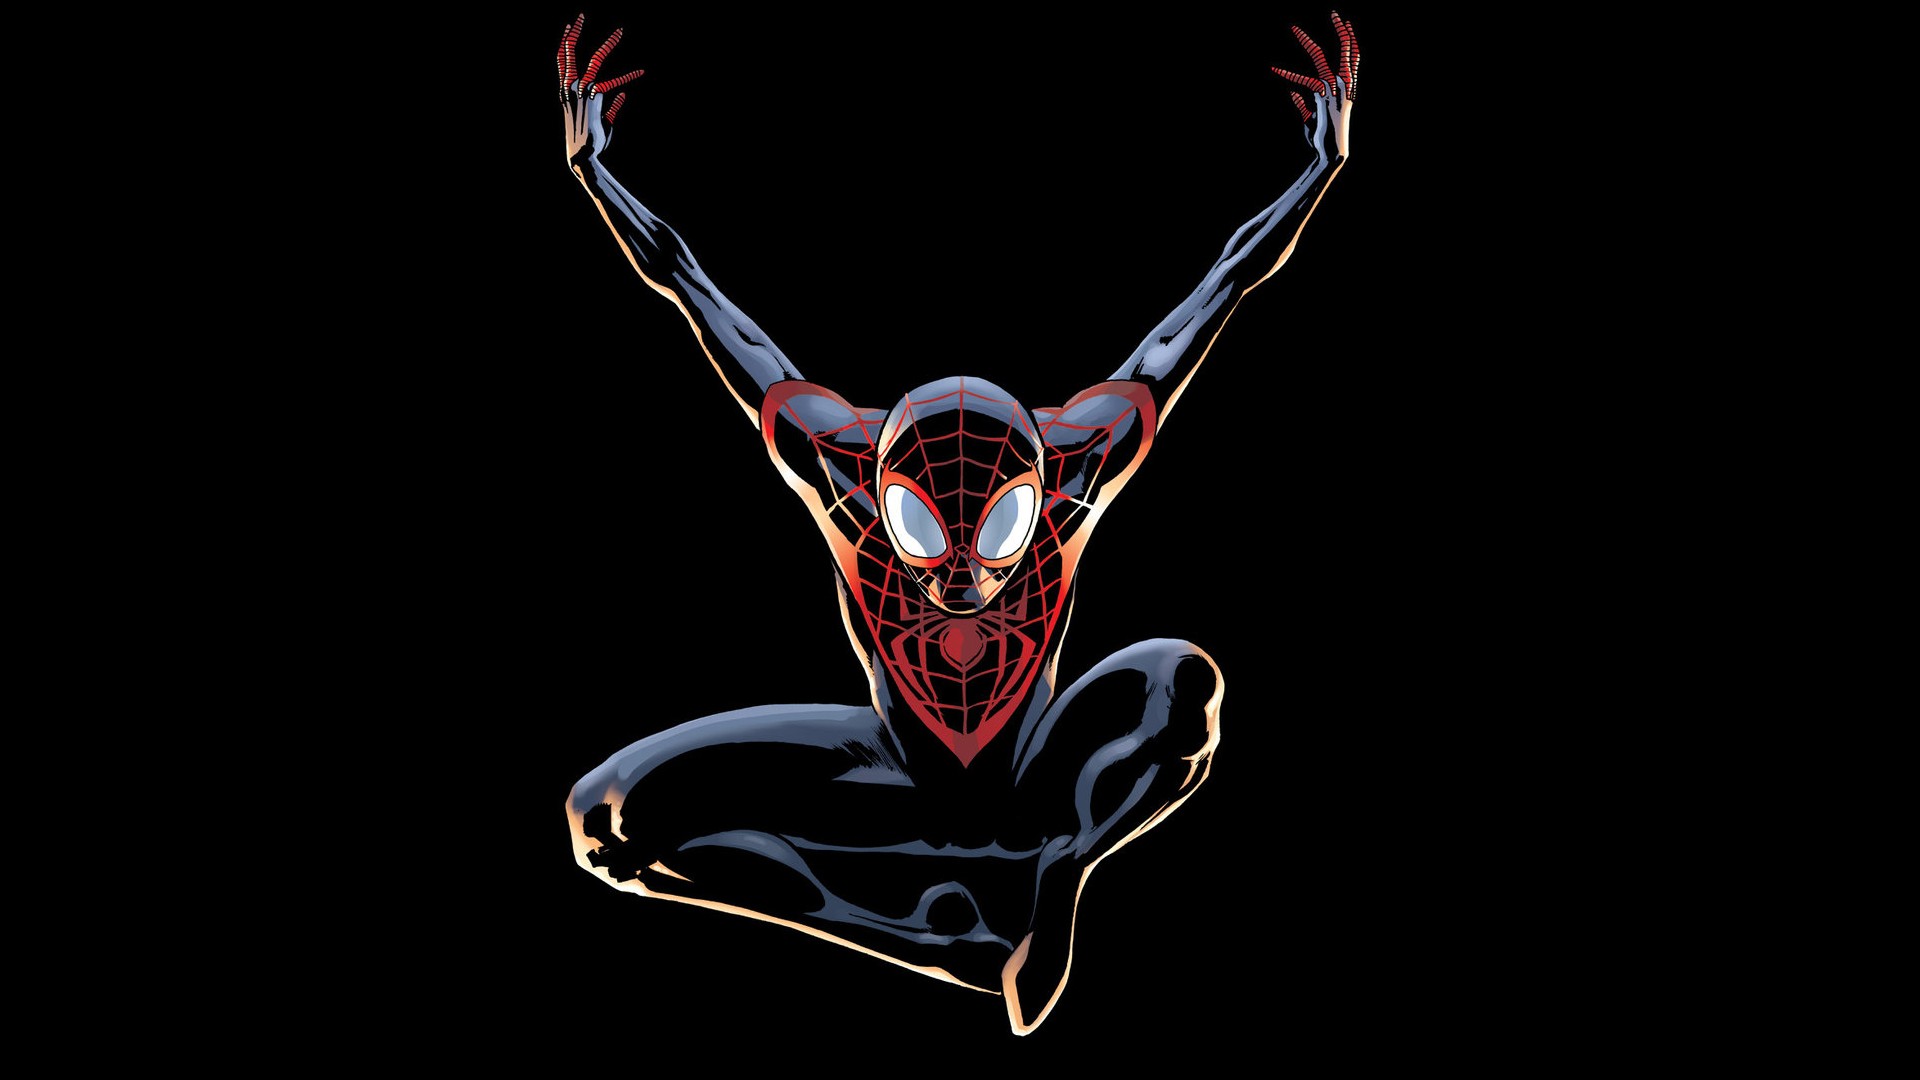 Spiderman Wallpaper Hd ① Download Free Hd Wallpapers For Desktop